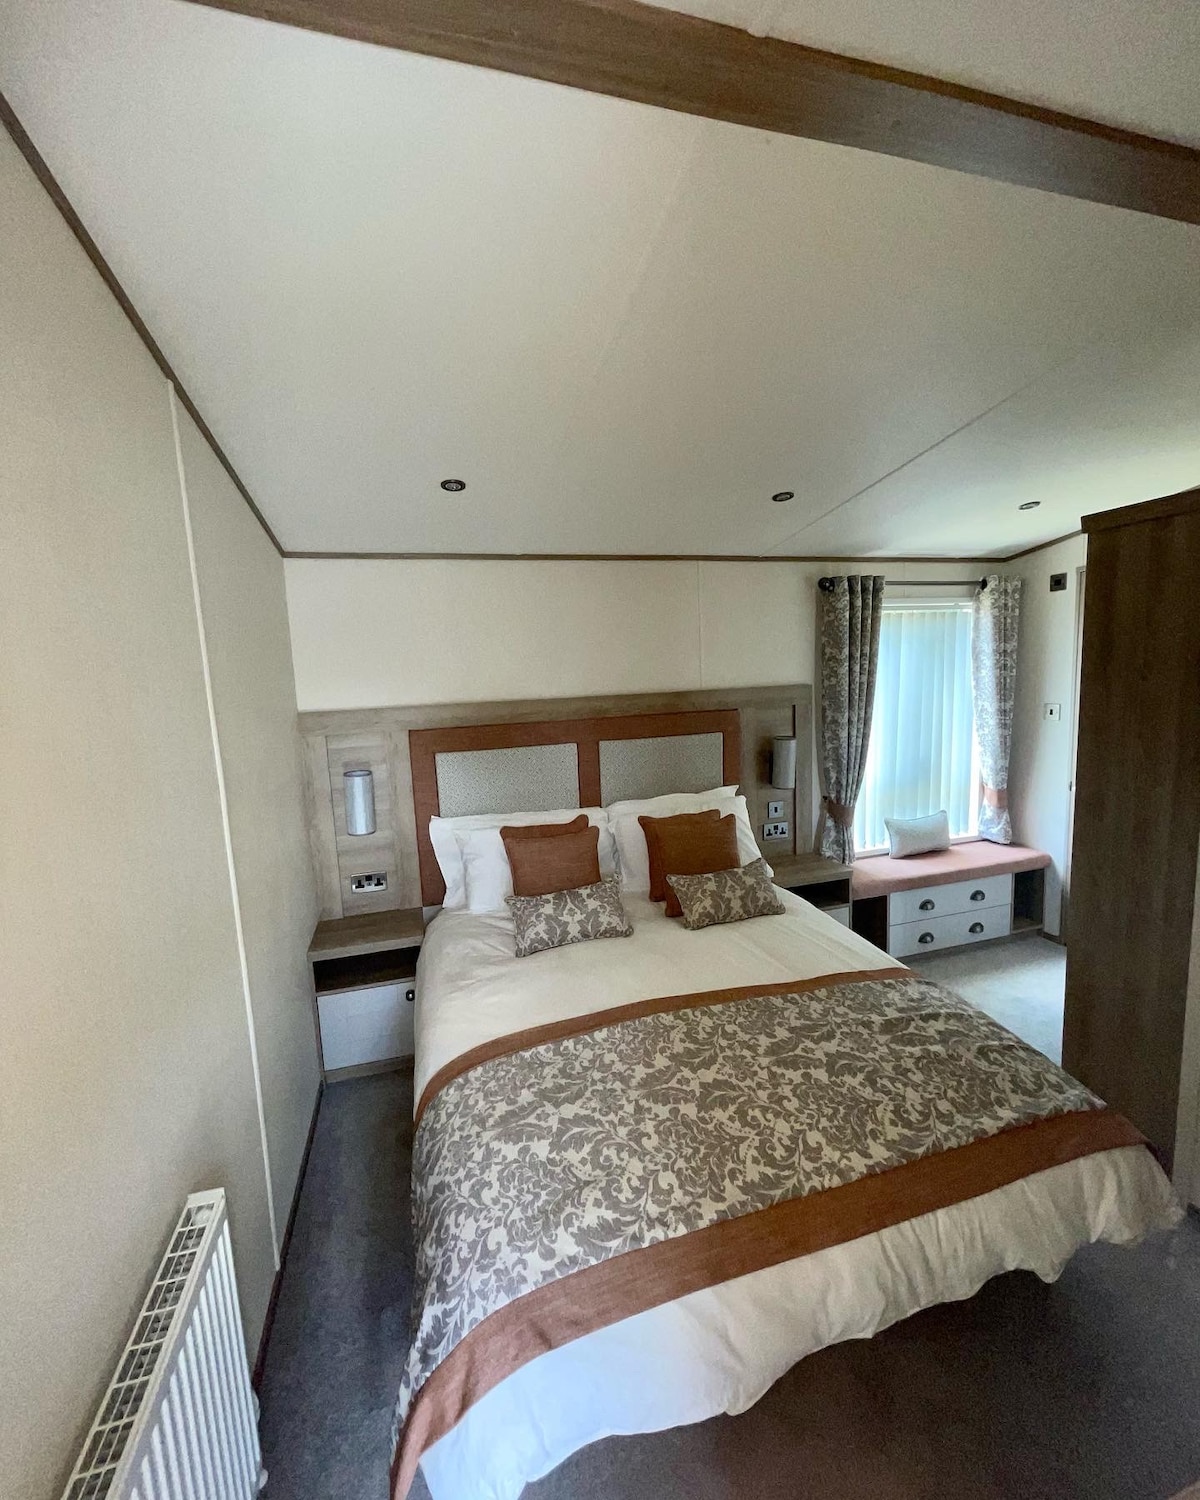 Fantastic 2 bed lodge on Tattershall lakes